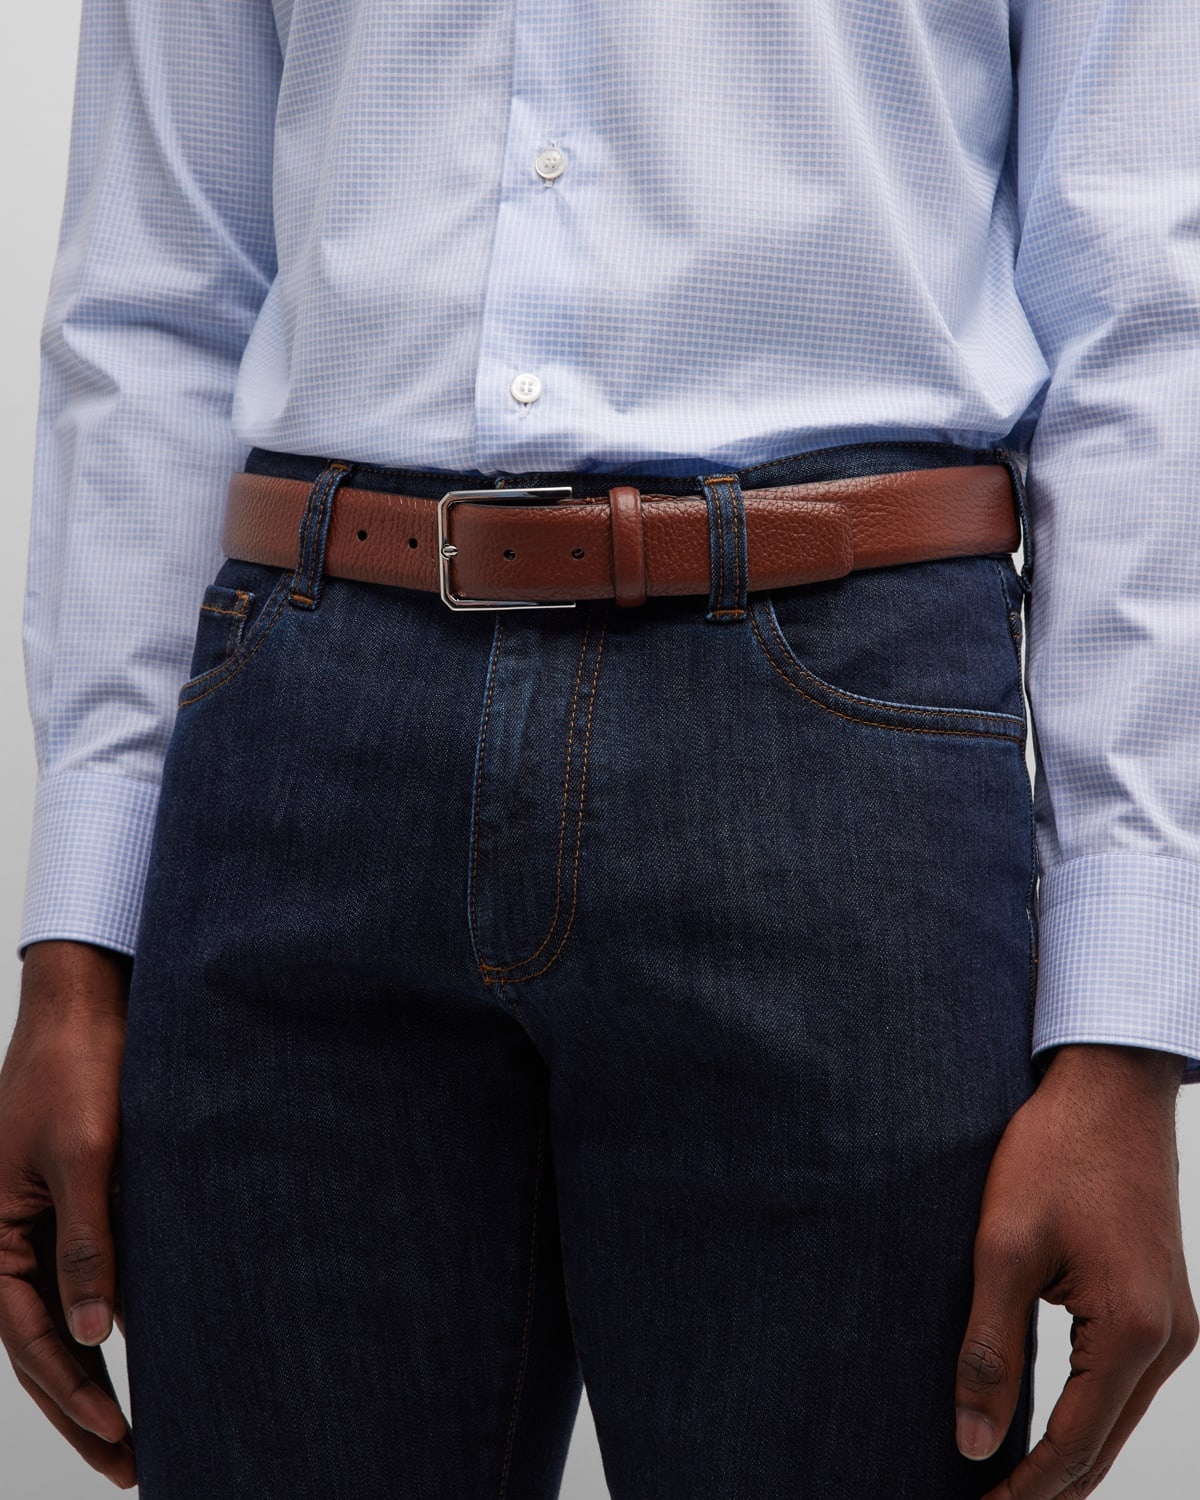 Men's Grained Leather Belt - 2